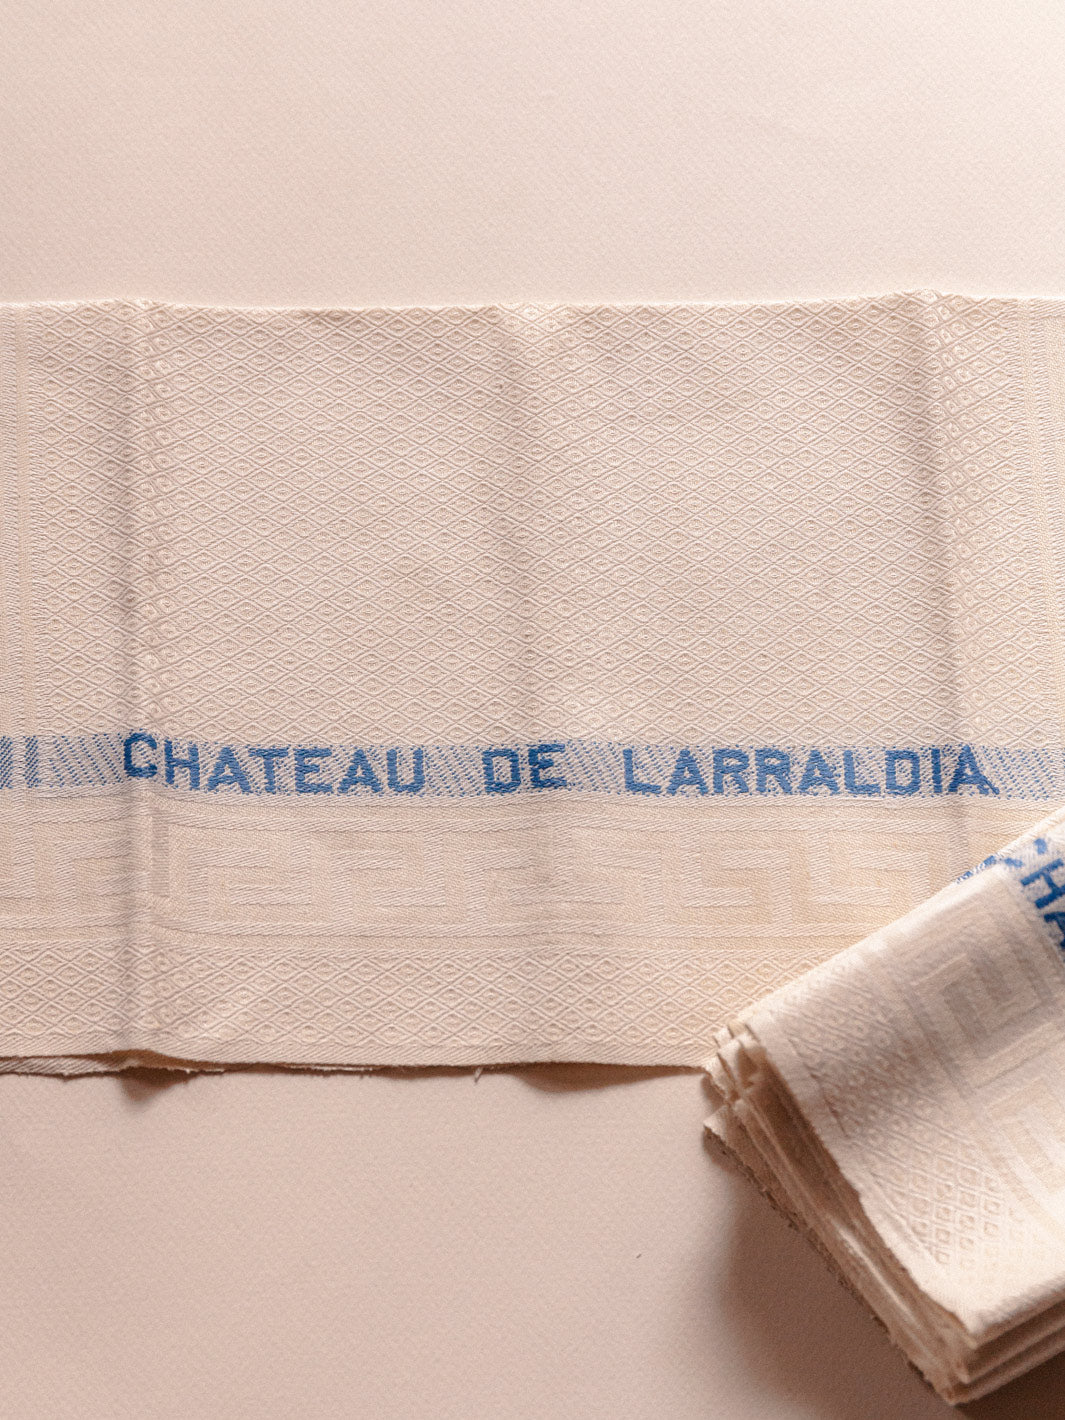 Set of 10 Chateau de Larraldia napkins